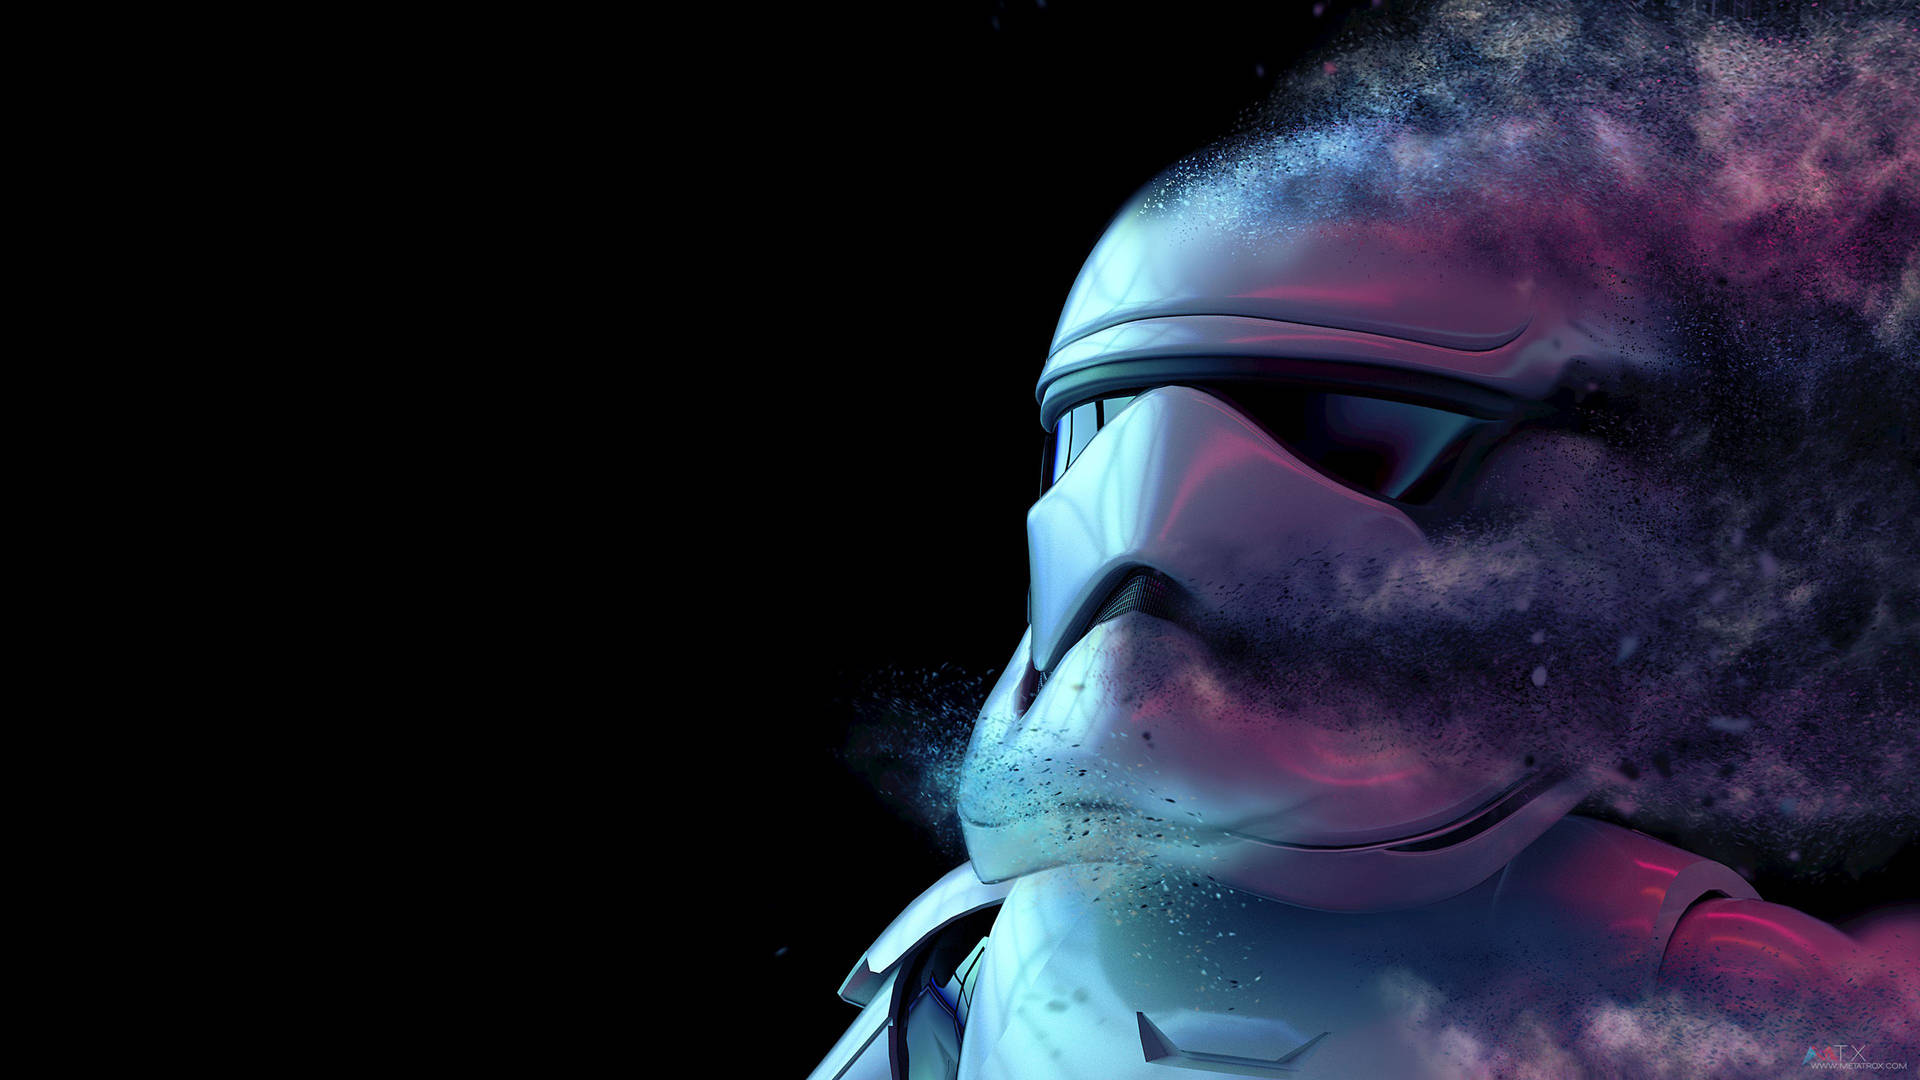 4kstar Wars First Order Stormtrooper: 4k Star Wars First Order Stormtrooper Wallpaper